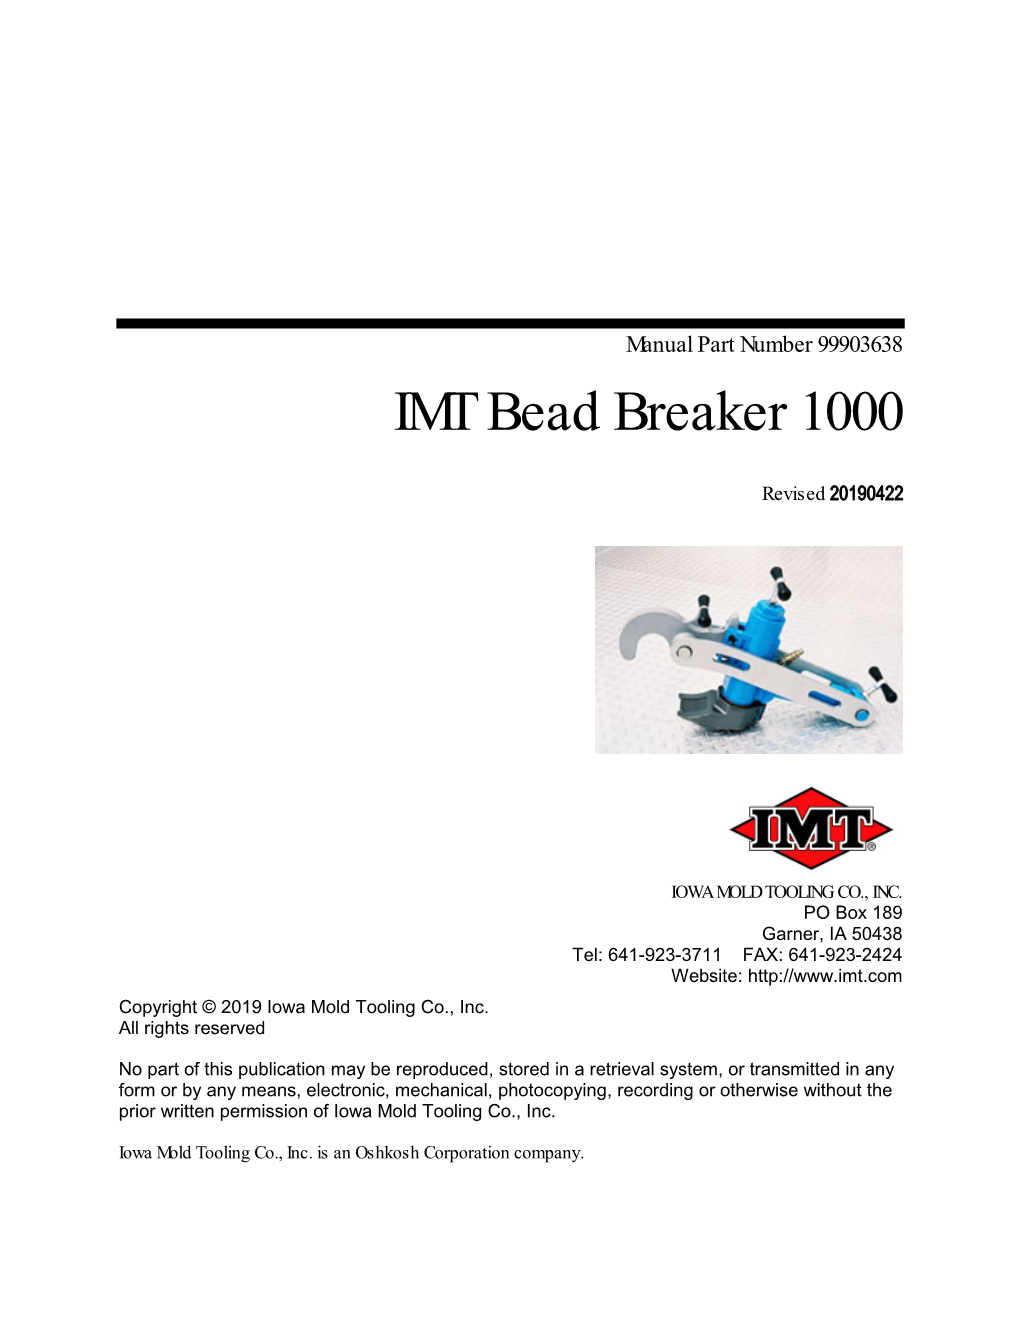 IMT Bead Breaker 1000